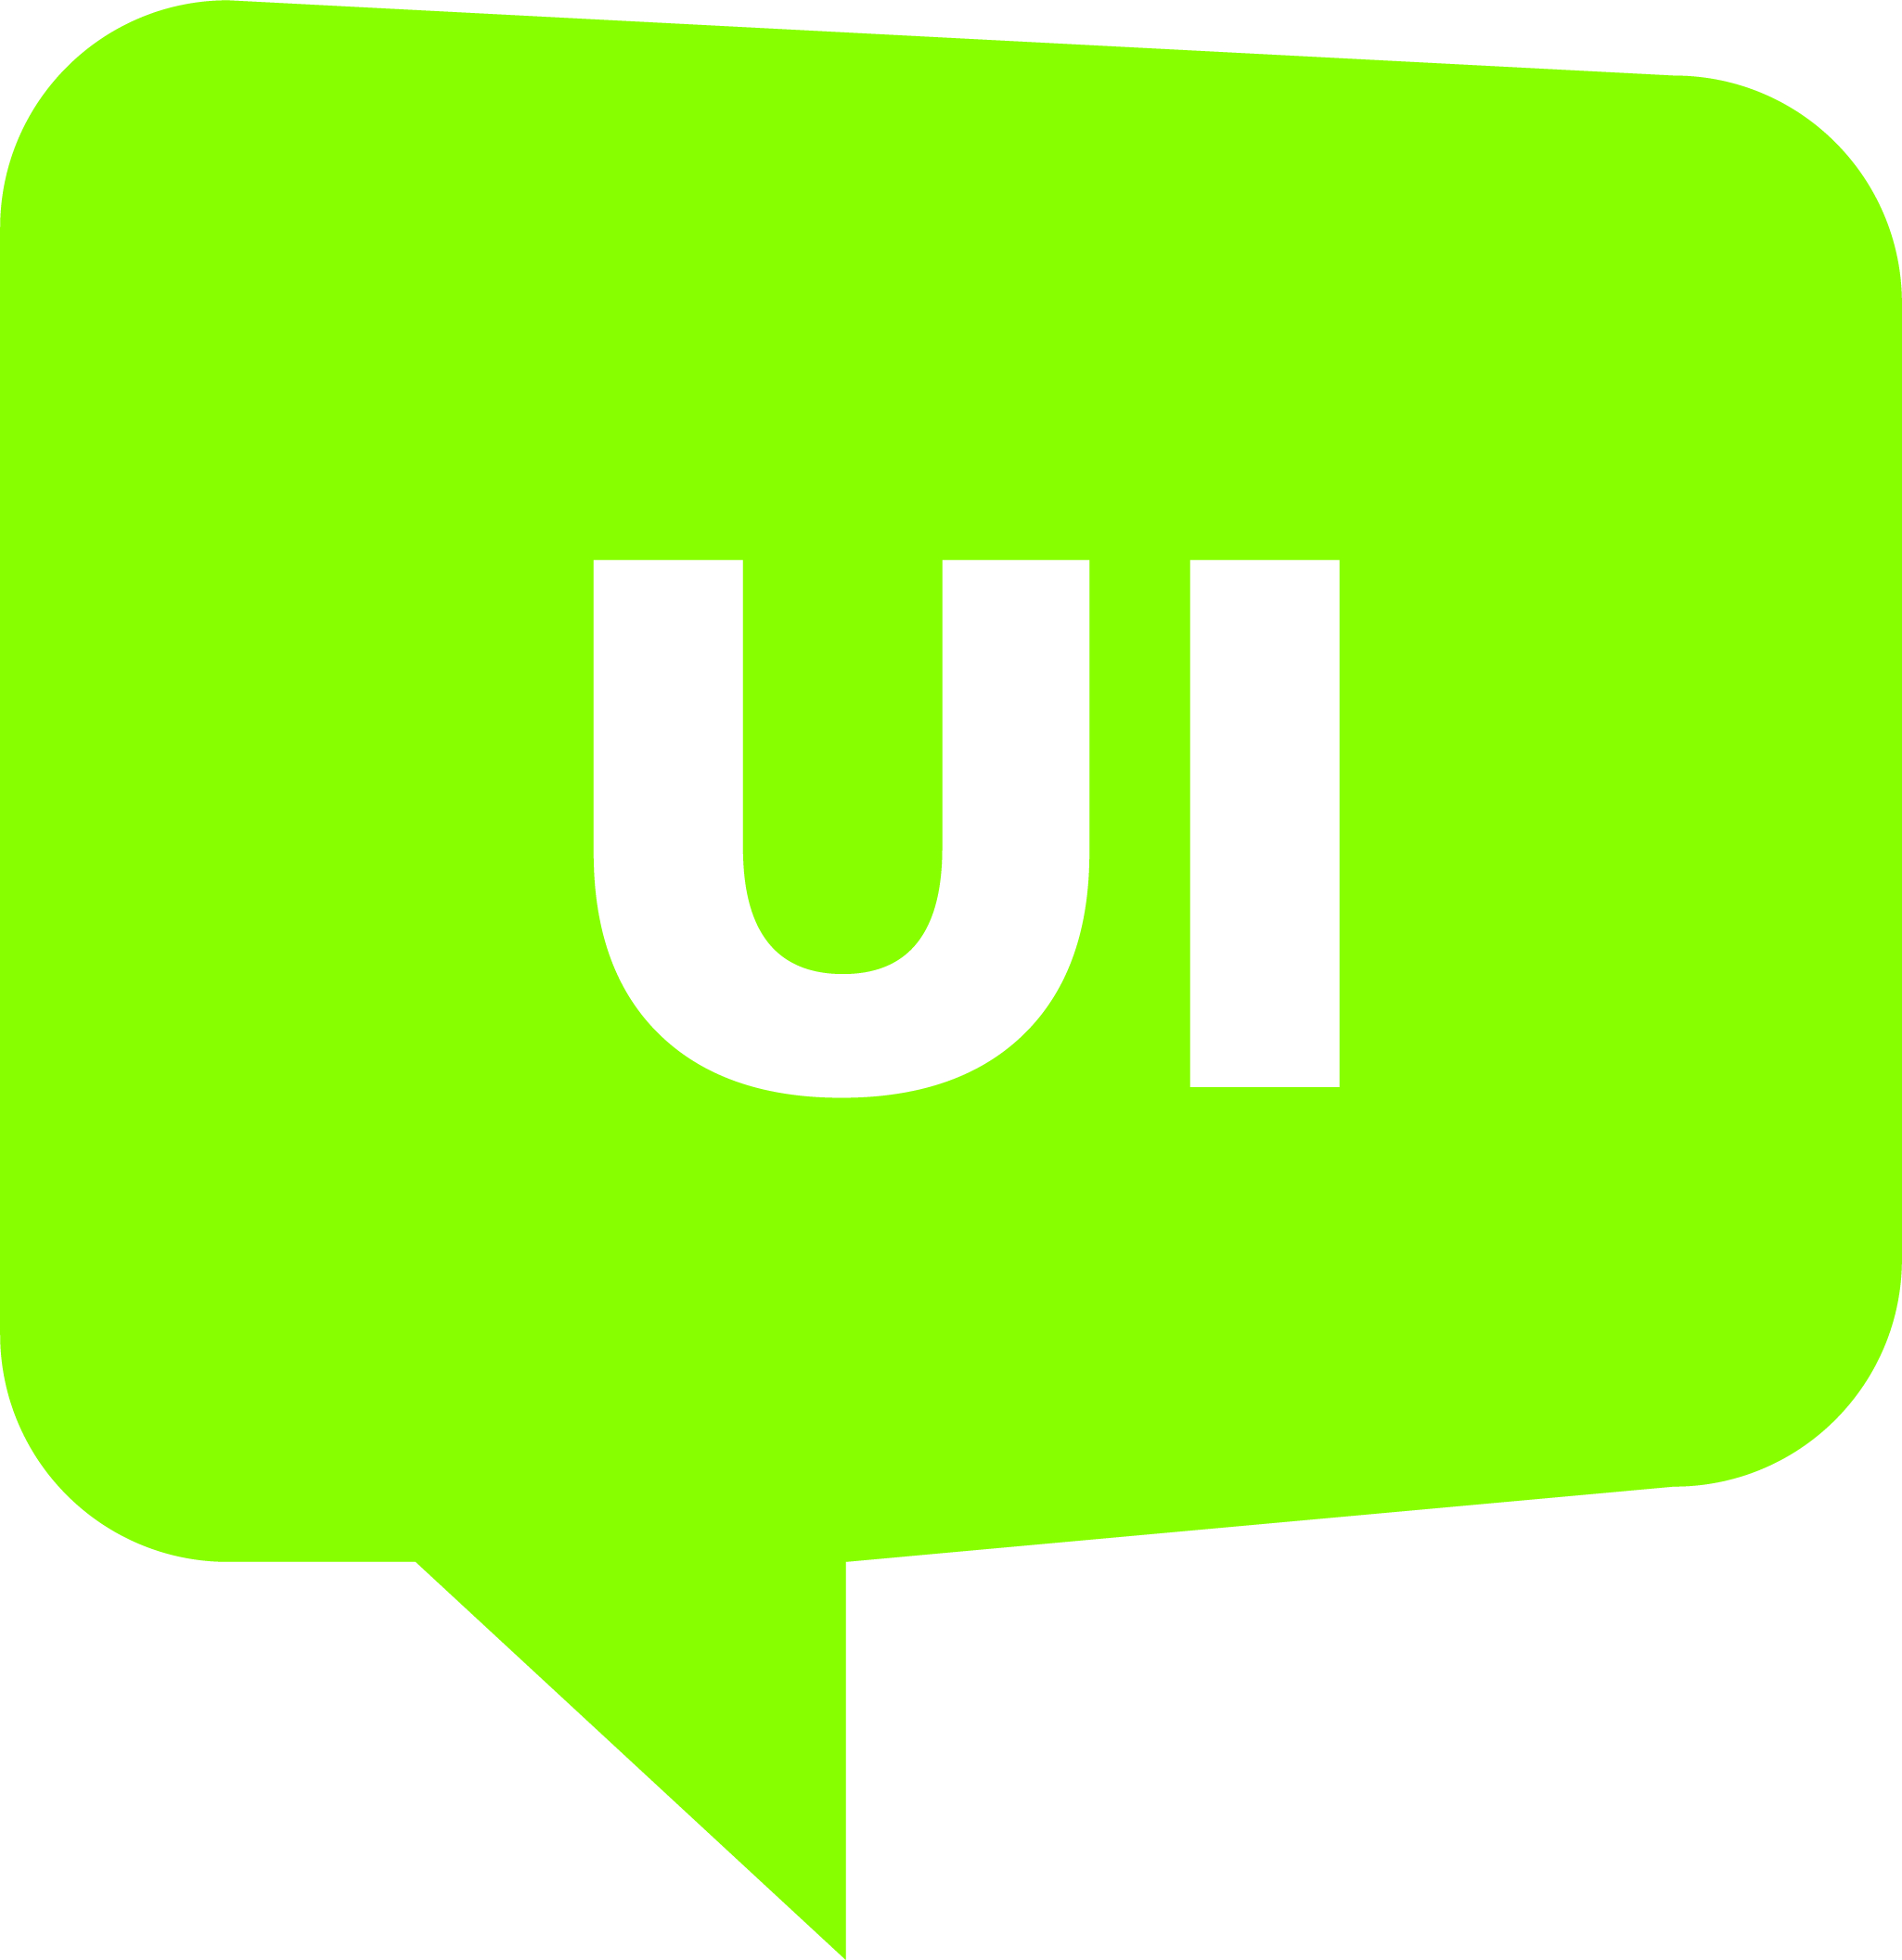 Objective UI, LLC